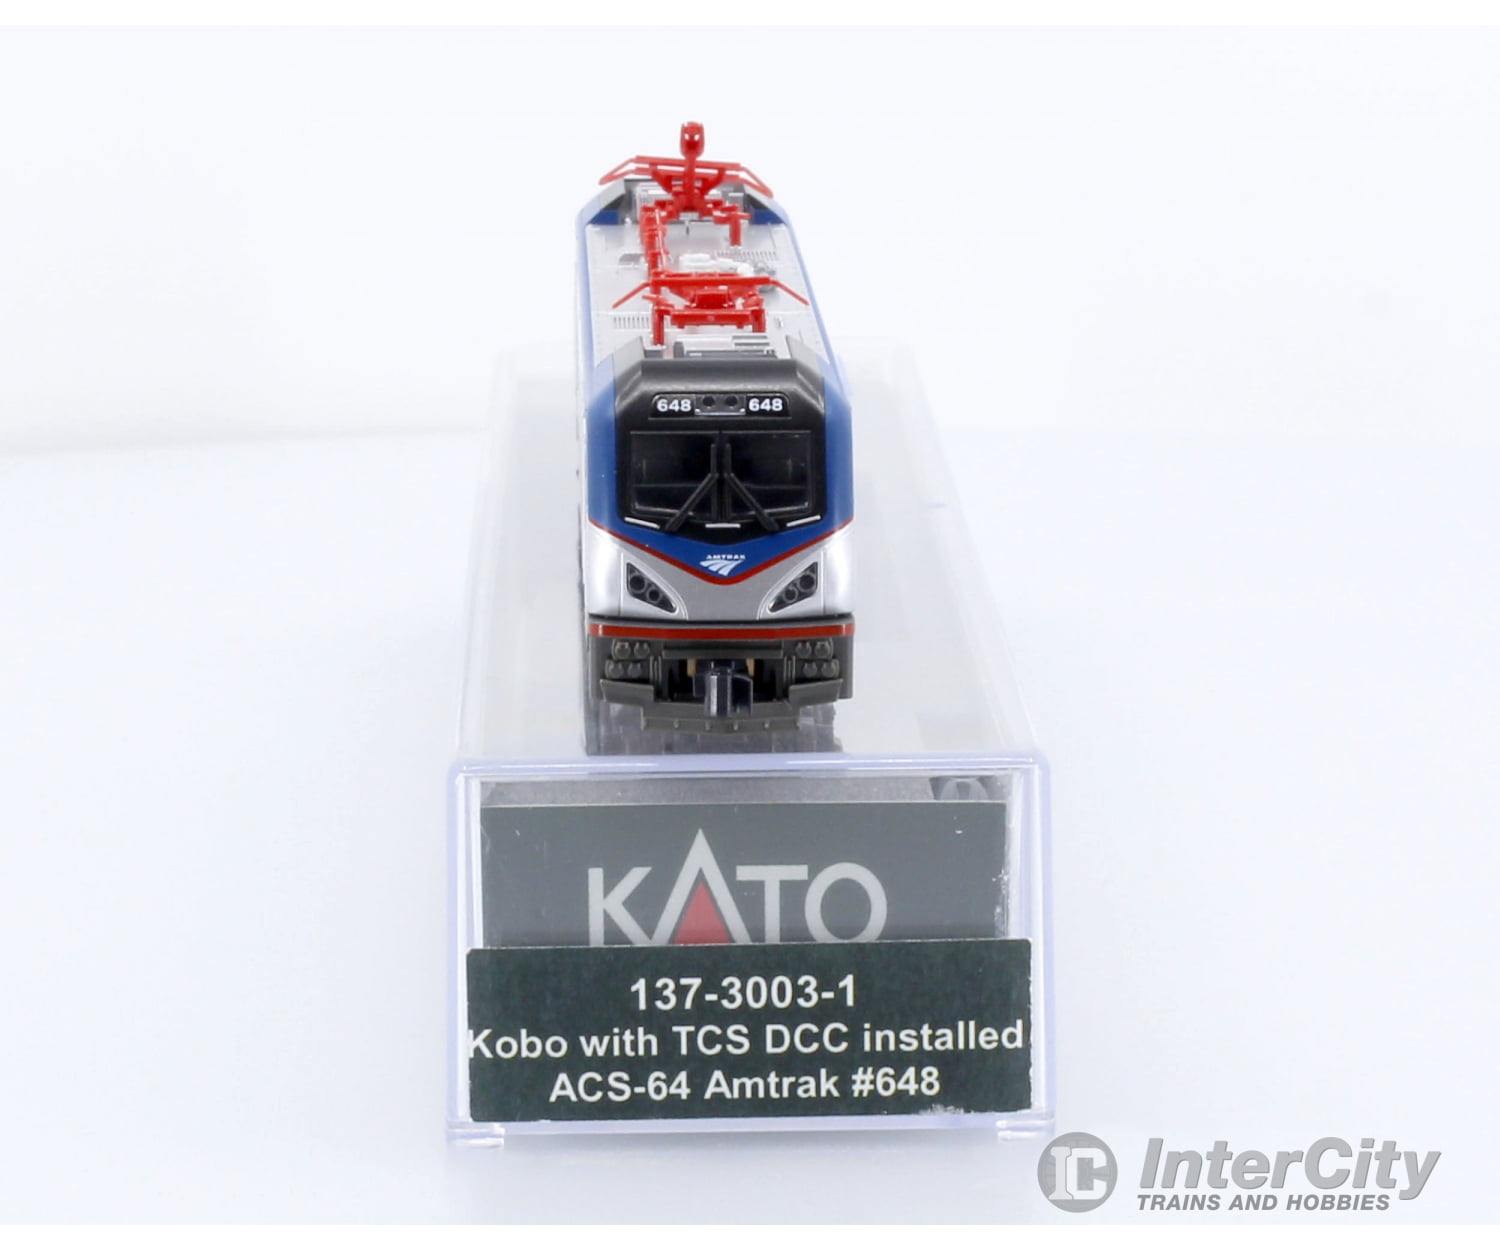 Kato N Scale Amtrak Siemens Acs-64 #648 With Tcs Decoder Locomotives & Railcars